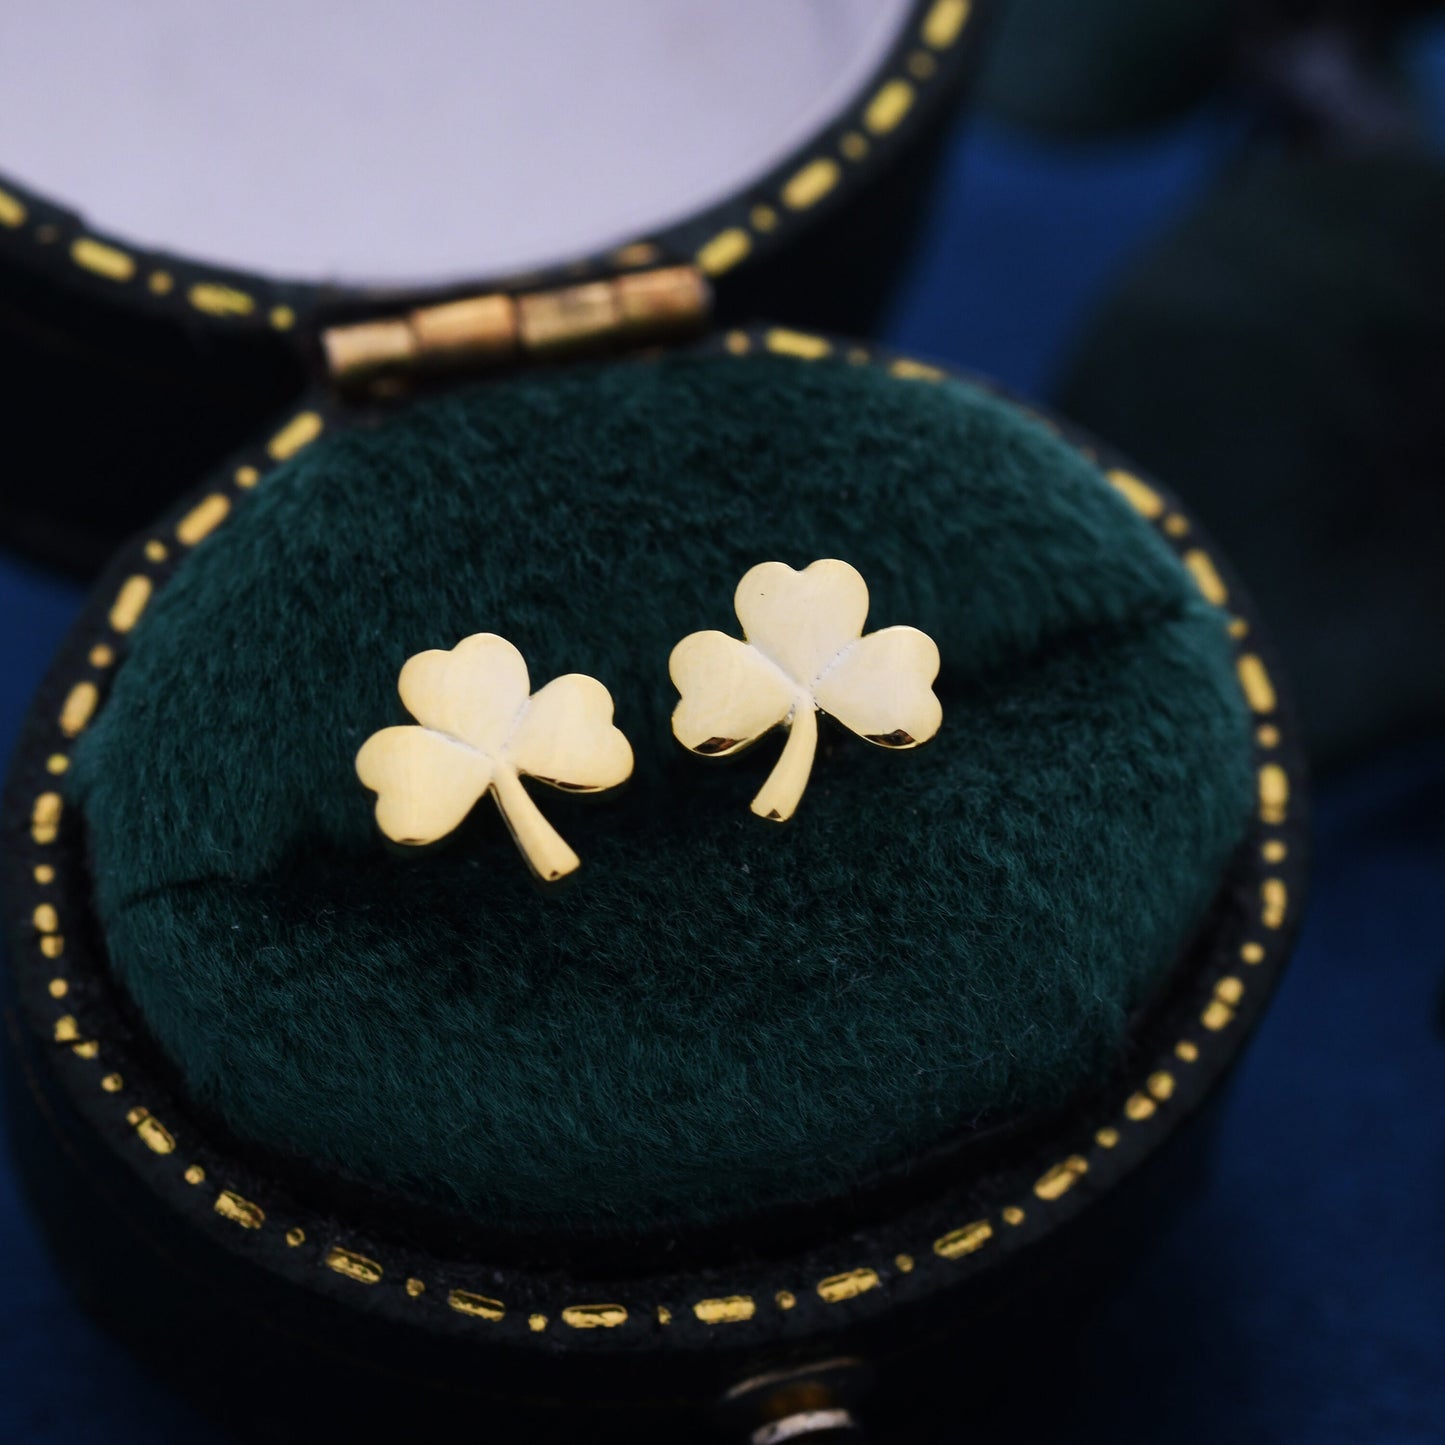 Shamrock Stud Earrings in Sterling Silver, Three Leaf Clover Earrings, Irish Earrings, Silver Gold or Rose Gold